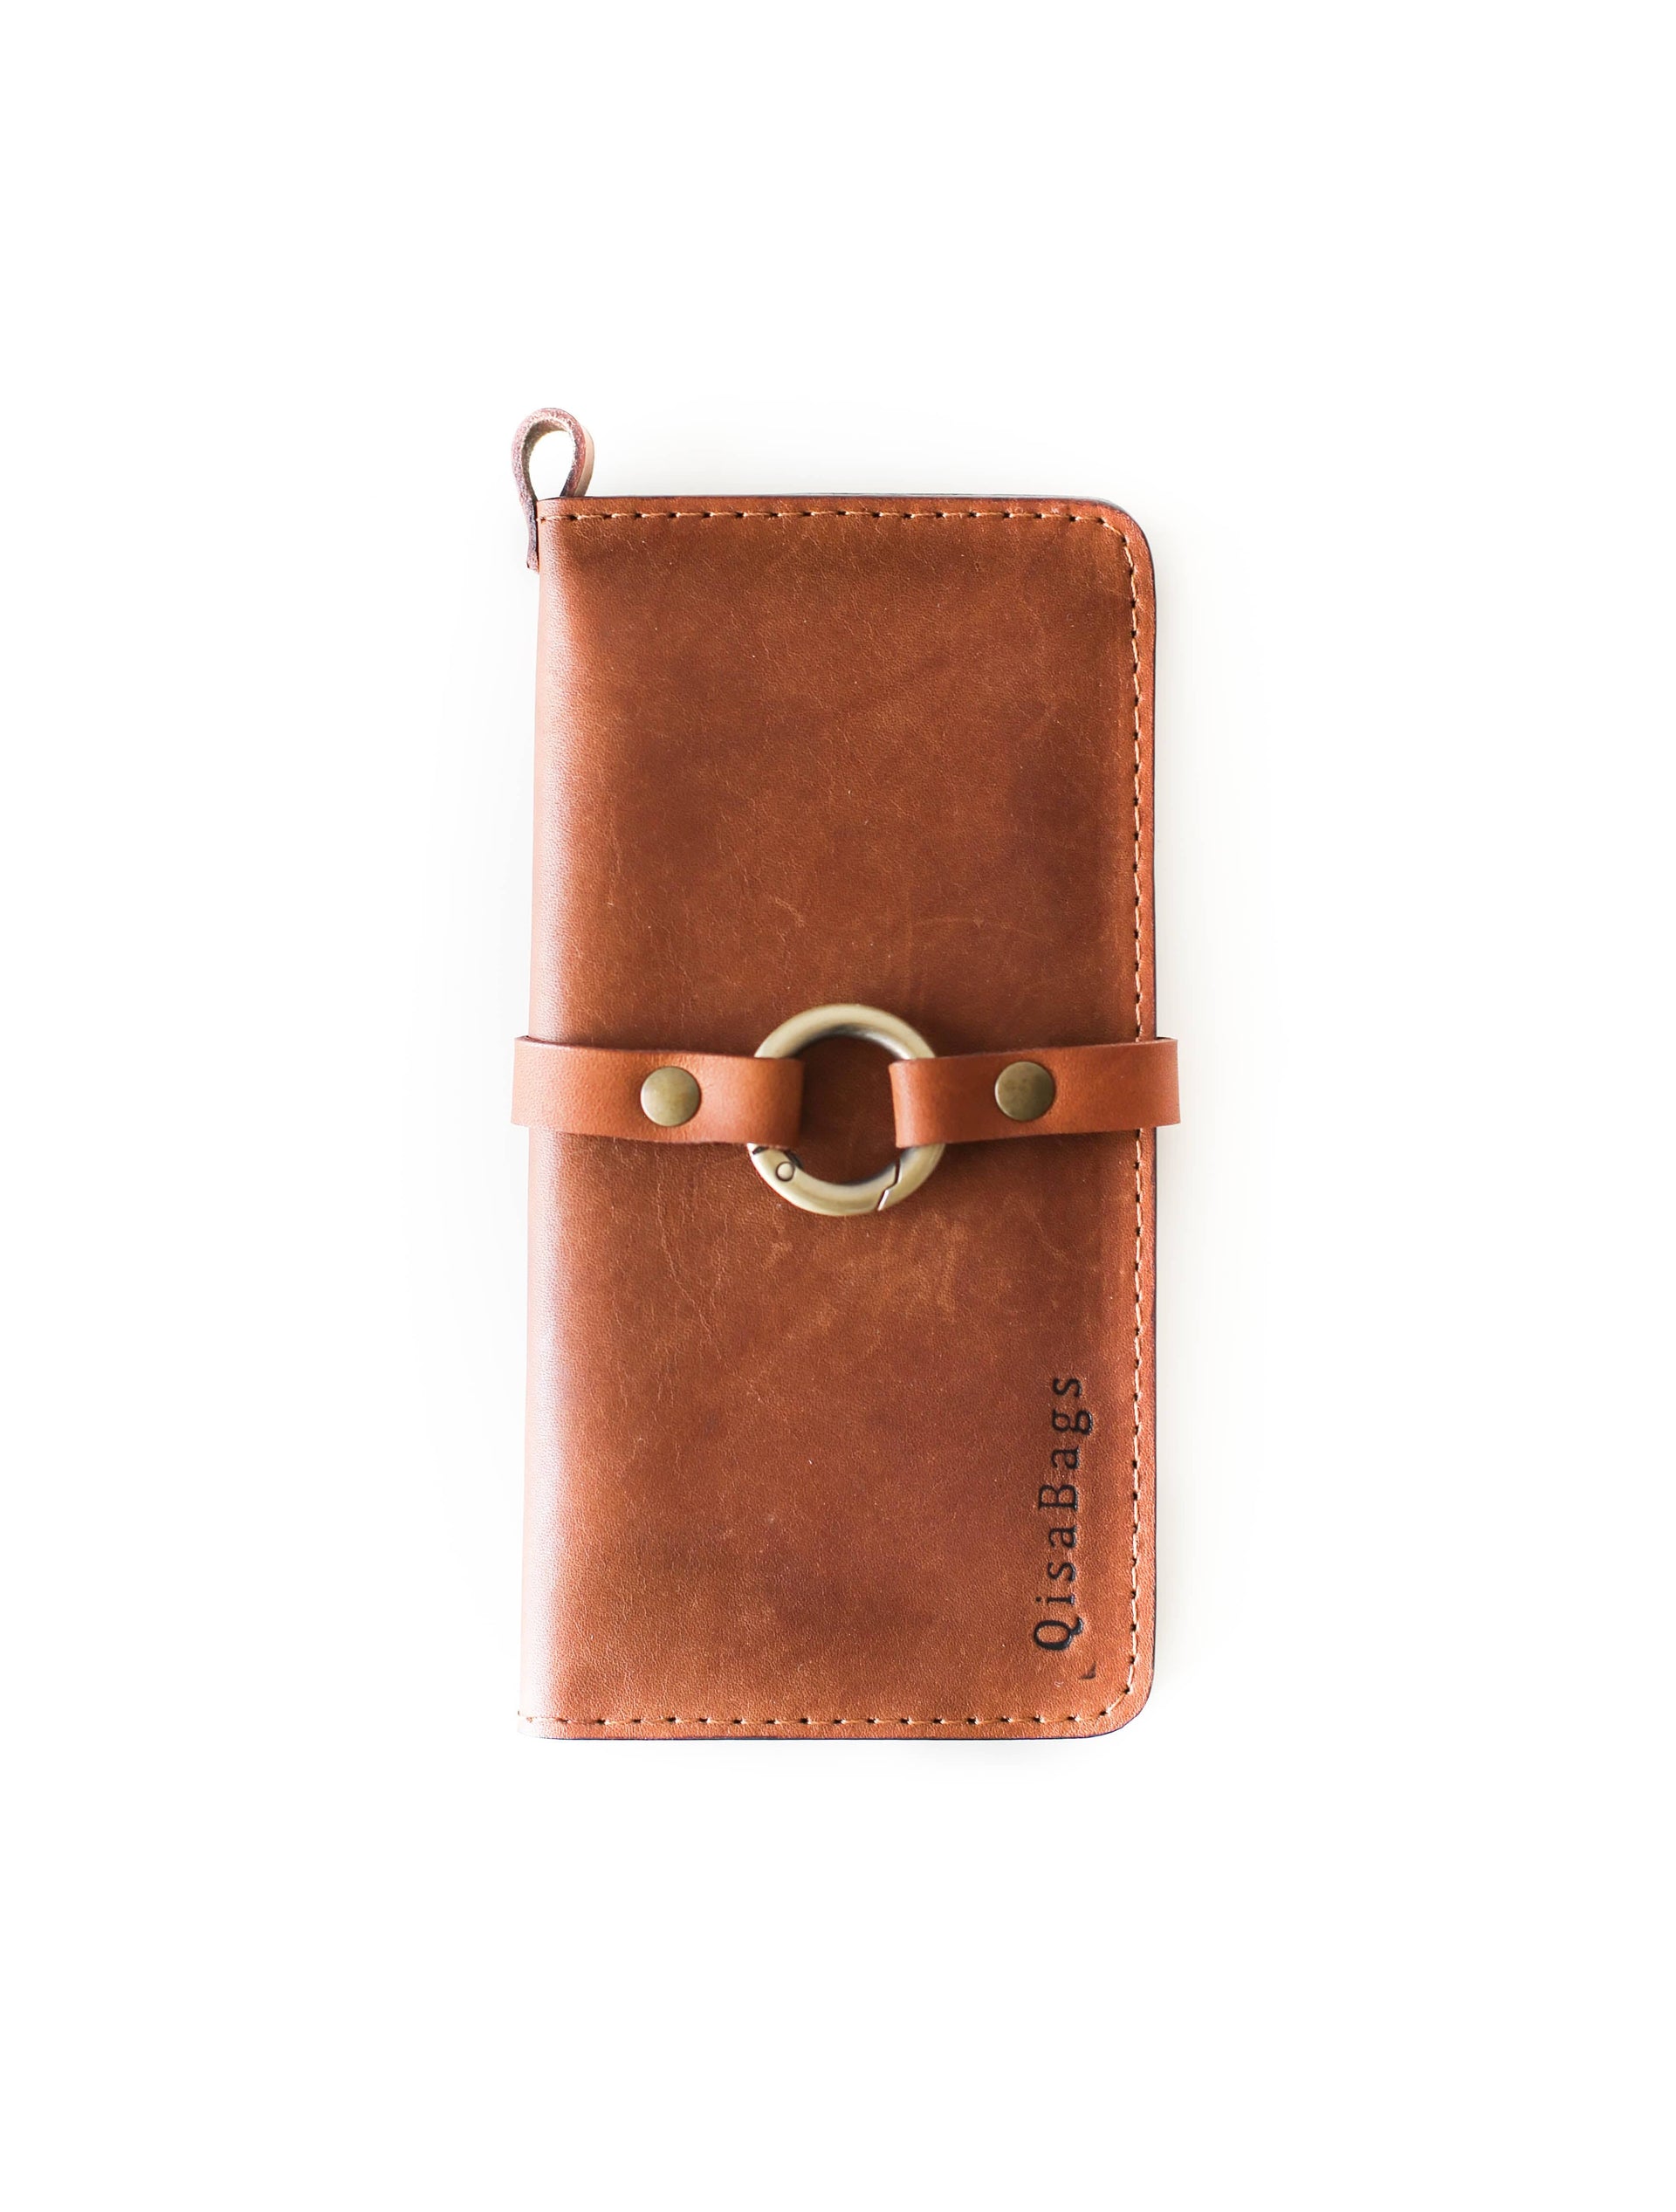 Minimalist Brown leather Wallet